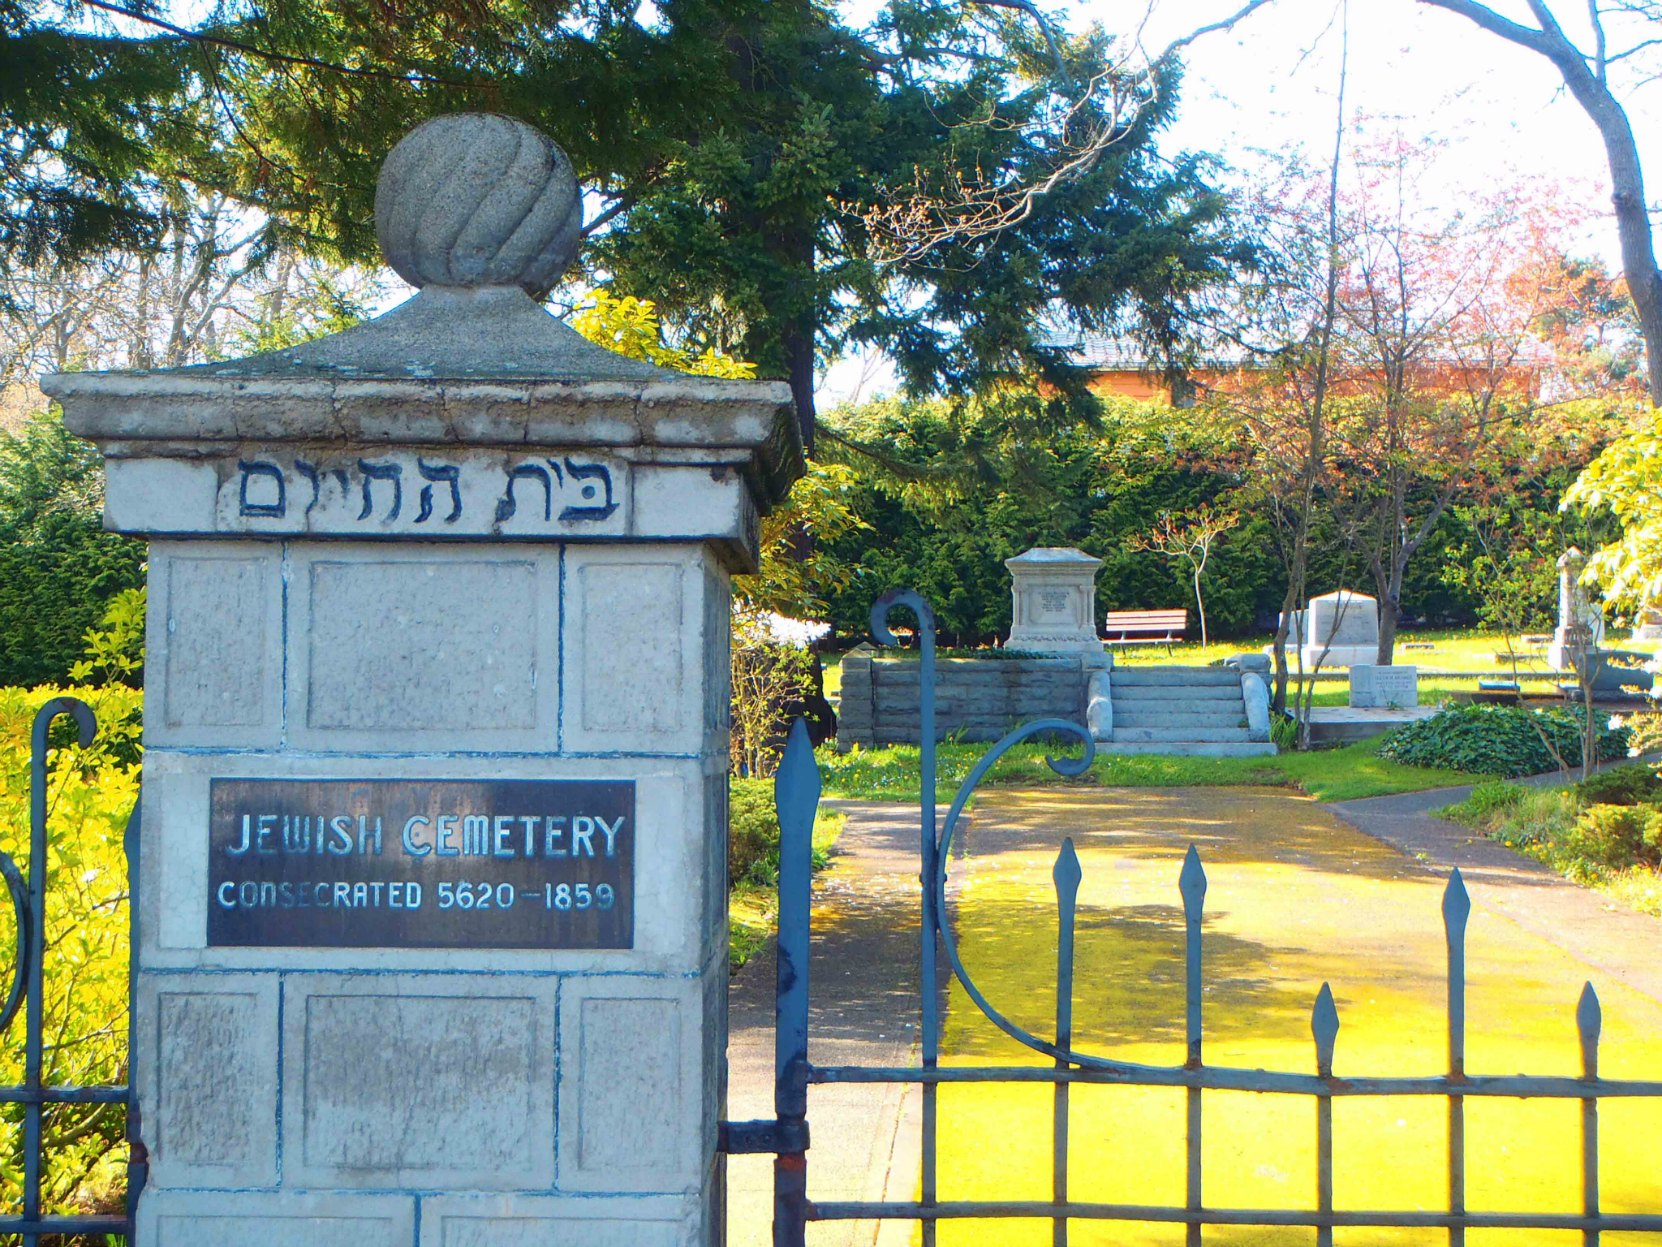 Entrance gate to Victoria Jewish Cemetery